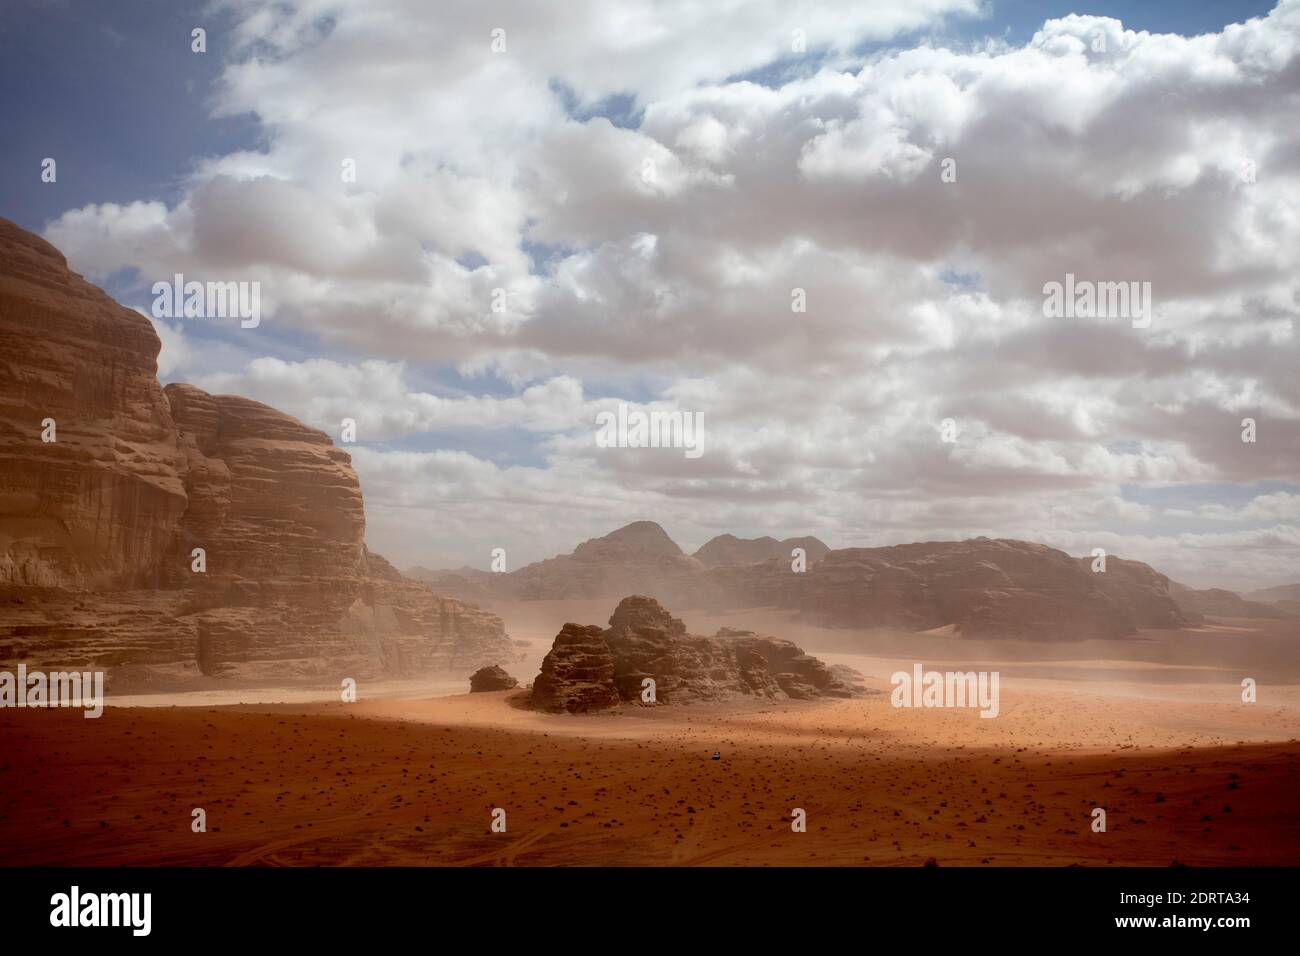 In Wadi Rum desert, Jordan Stock Photo